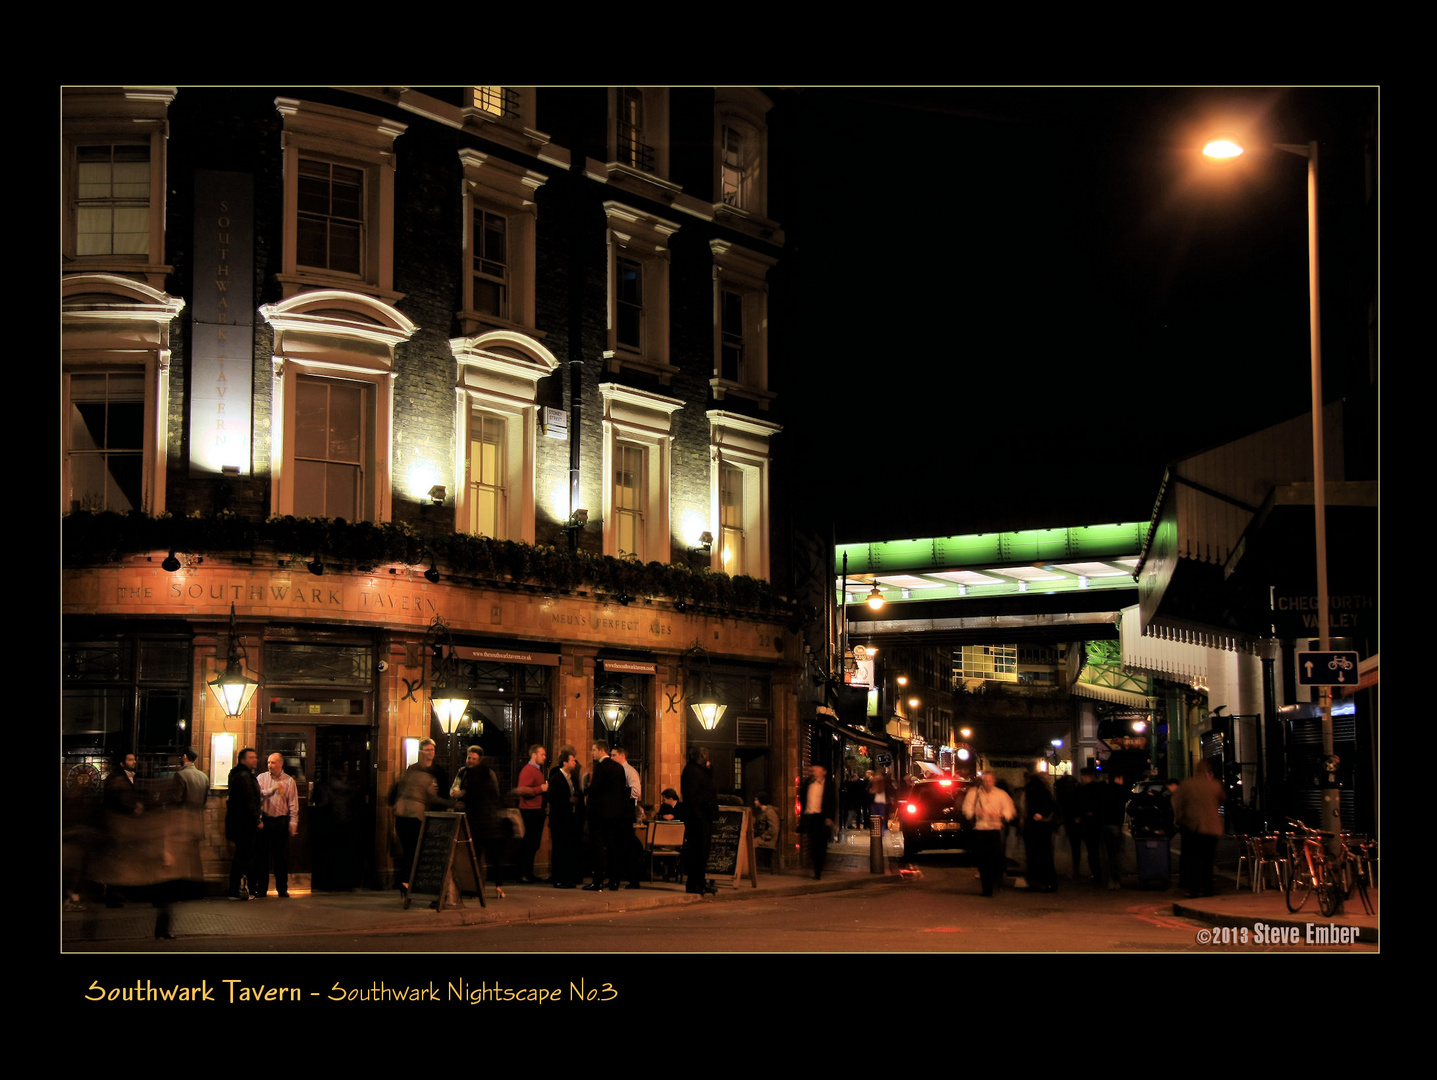 Southwark Tavern - Southwark Nightscape No. 3